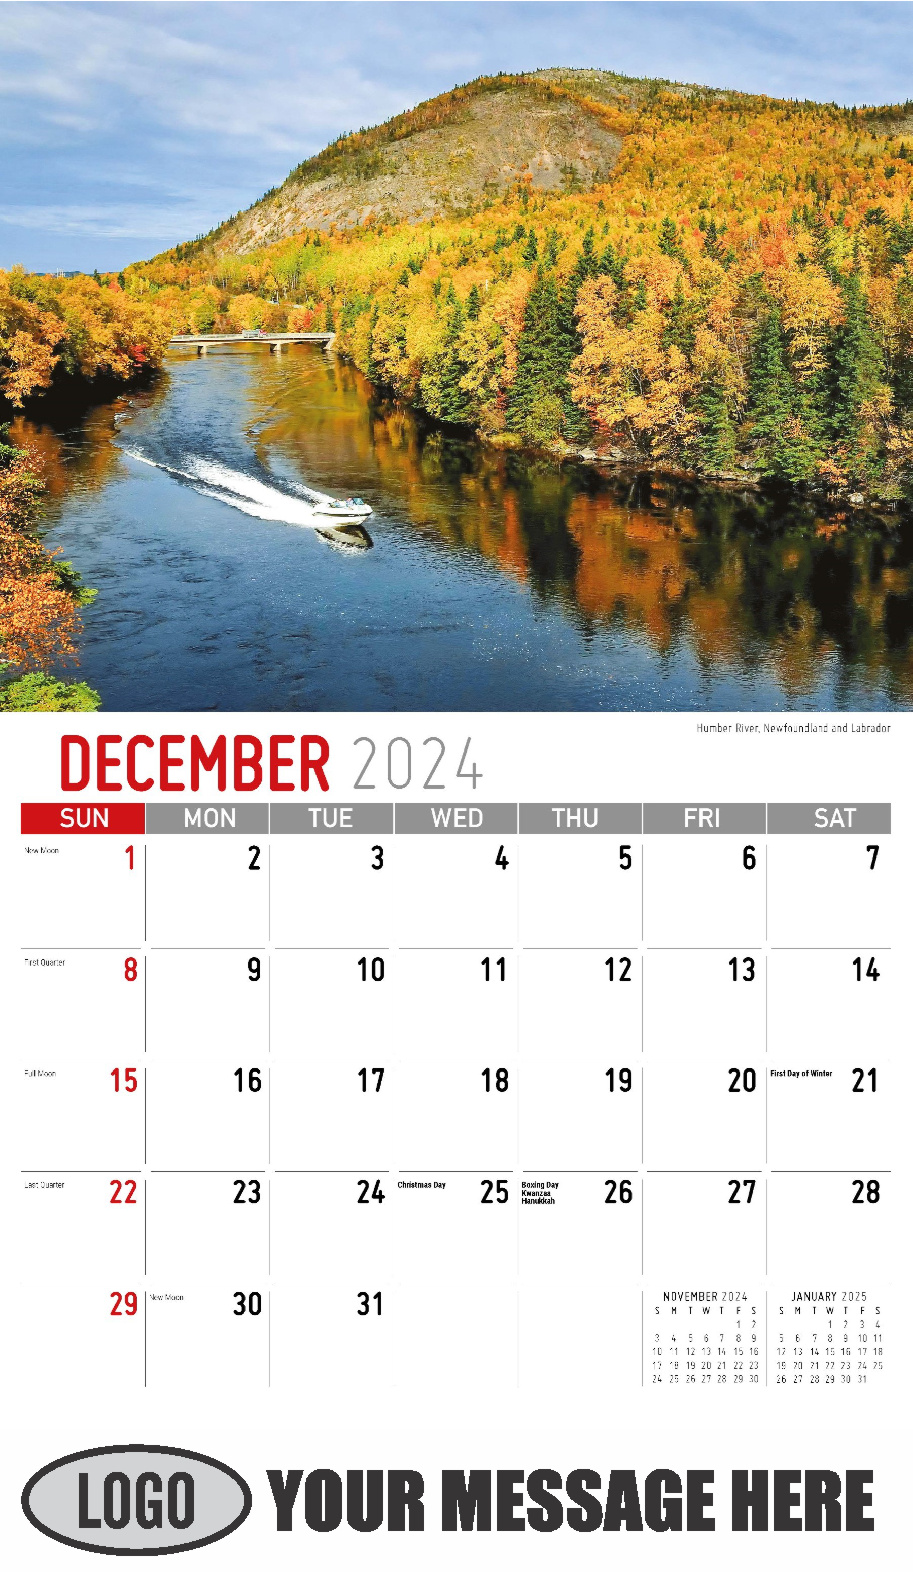 Atlantic Canada Scenic 2024 Business Promotion Calendar - December